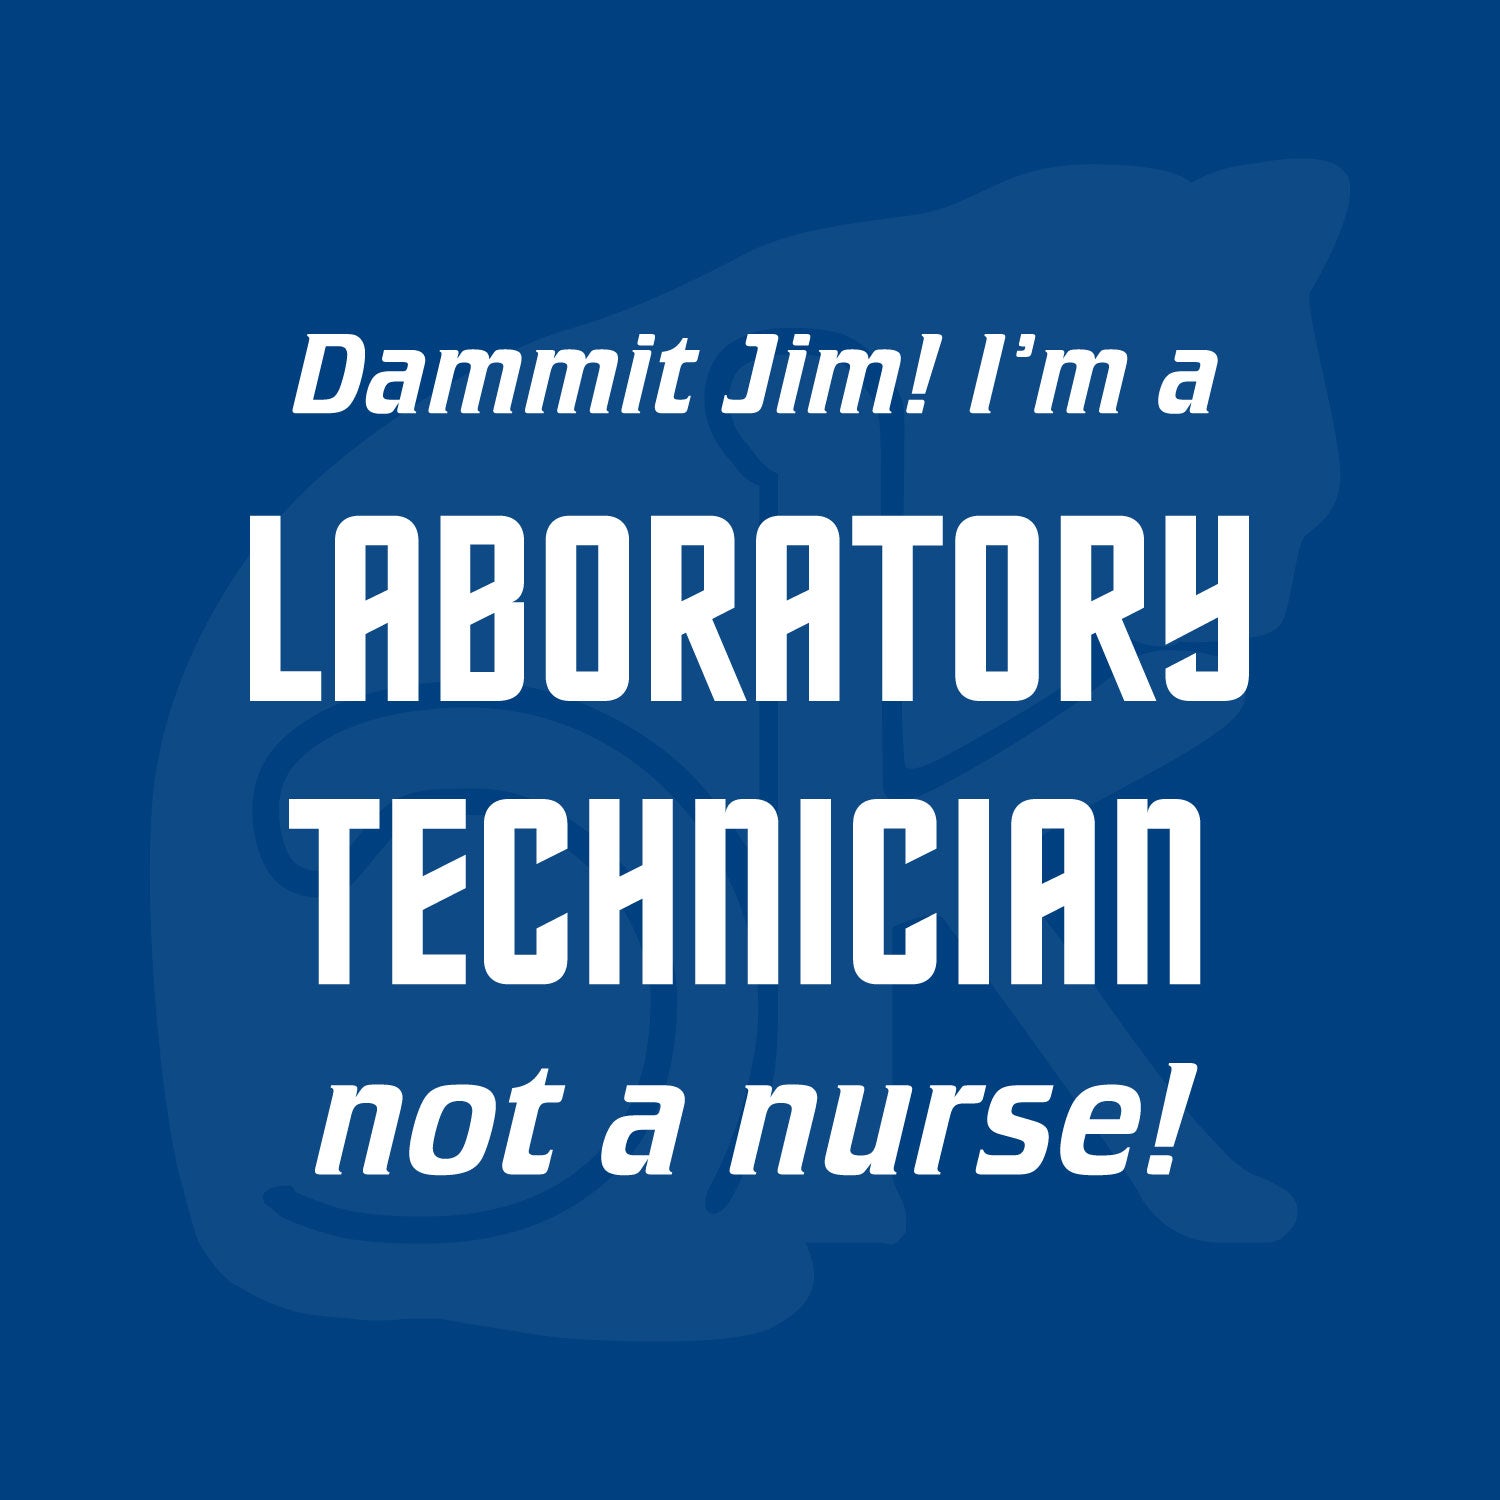 Standalone watermarked graphic in Star Trek font: "Dammit Jim! I'm a LABORATORY TECHNICIAN not a nurse!"